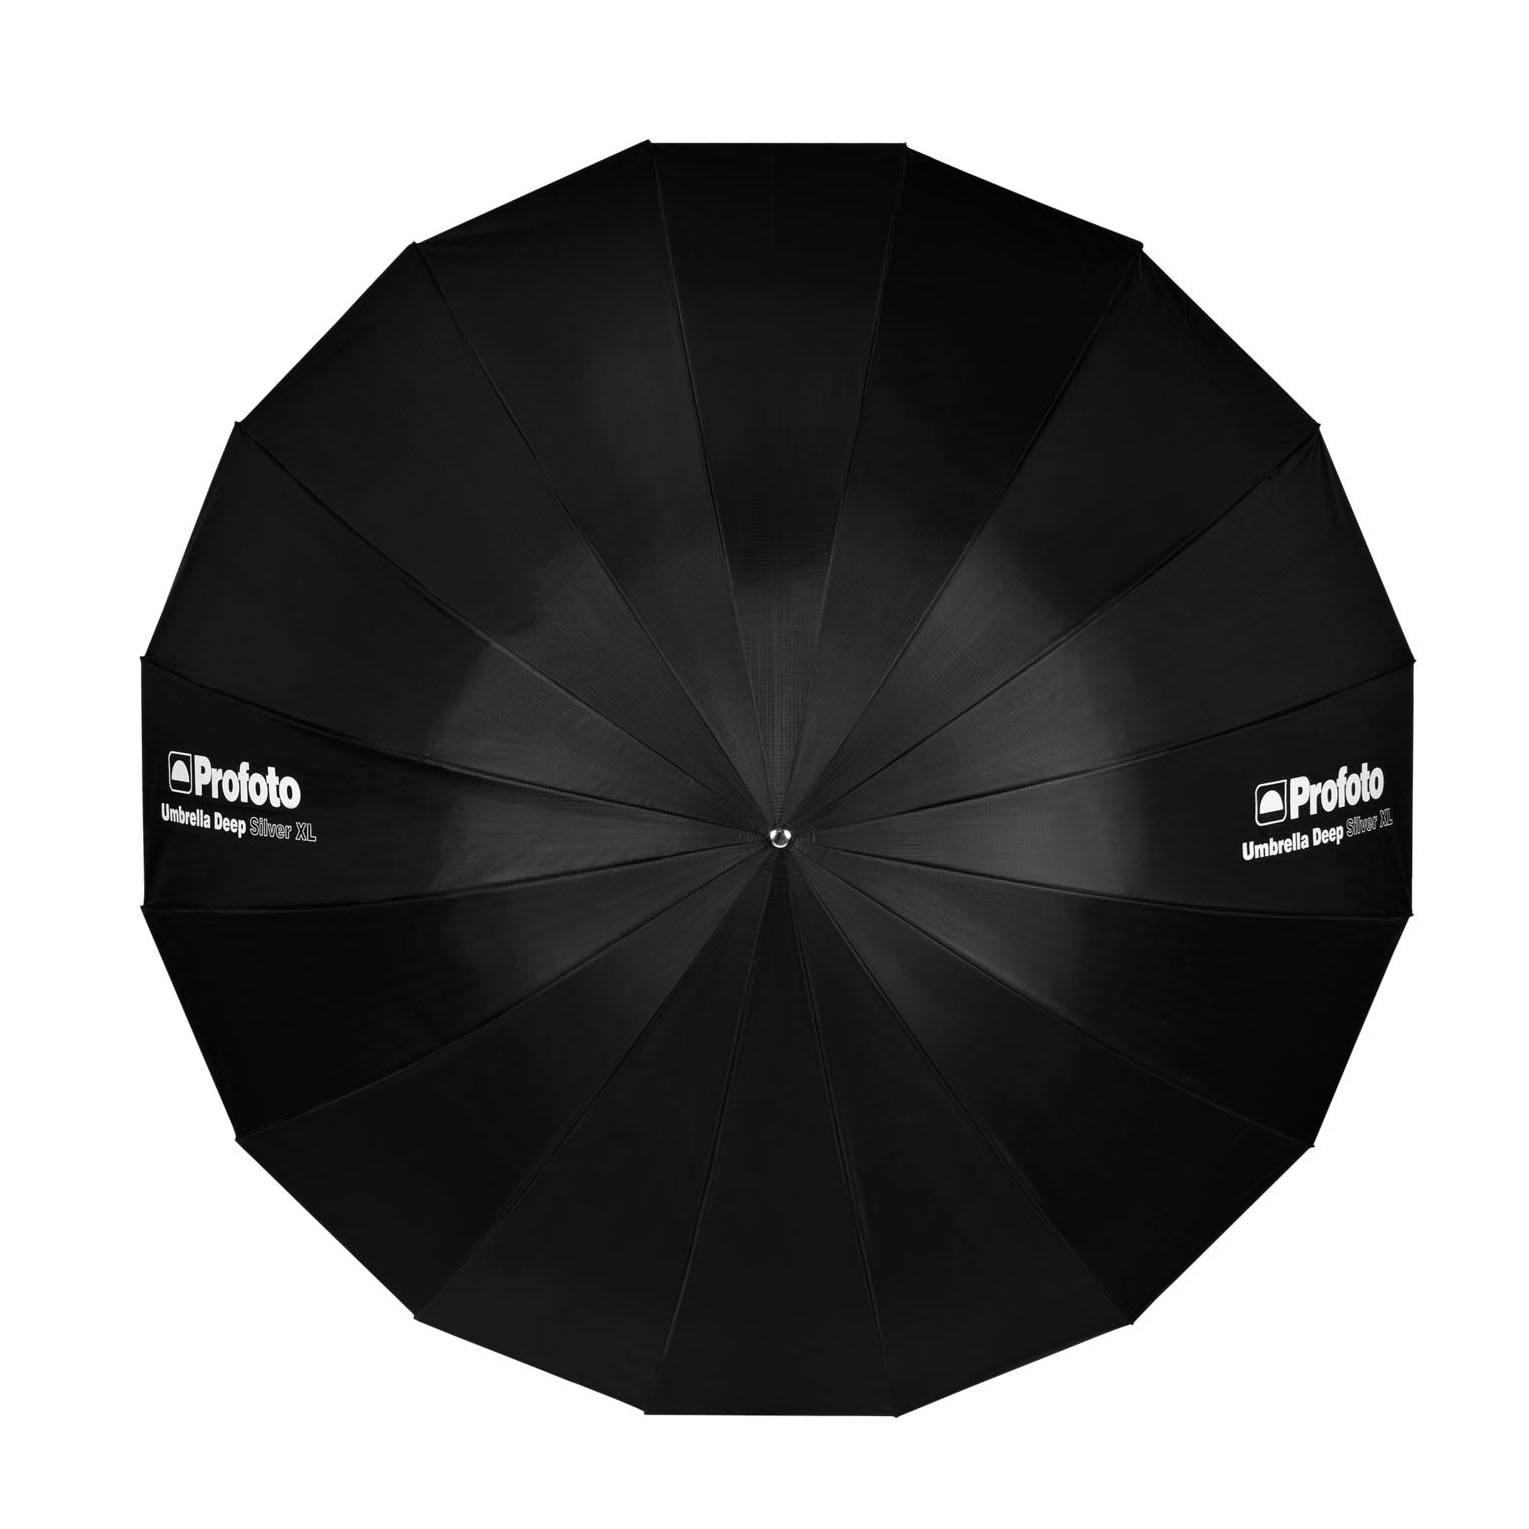 Profoto Umbrella Deep Silver XL (165cm/65")